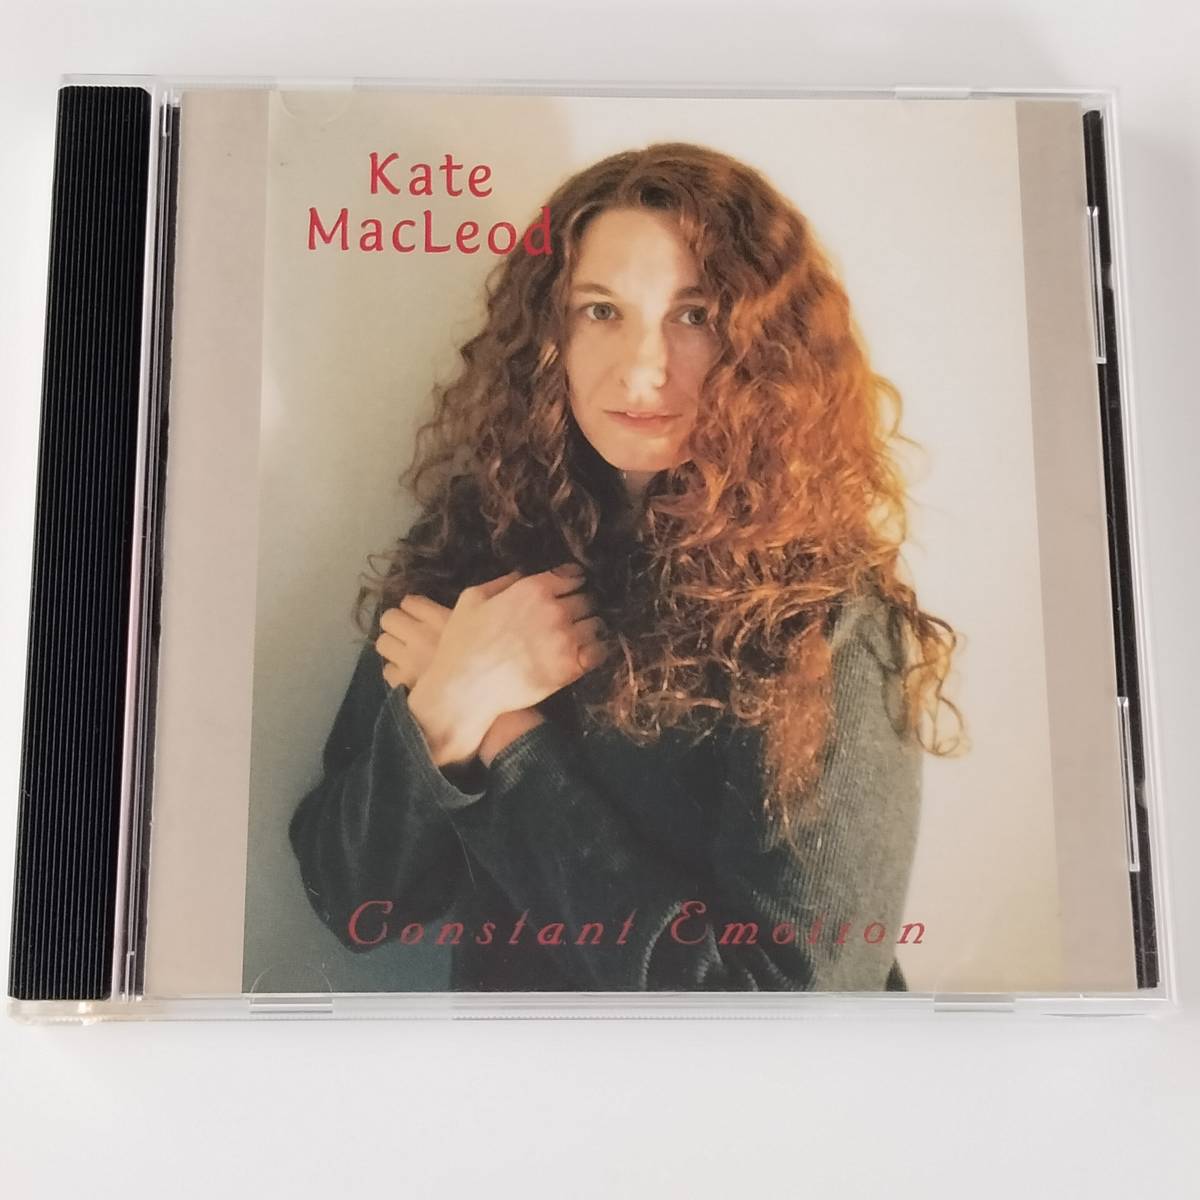 Kate MacLeod Kate *mak Leo do/ Constant Emotion (WBG0032) 1997 год Folk, Country